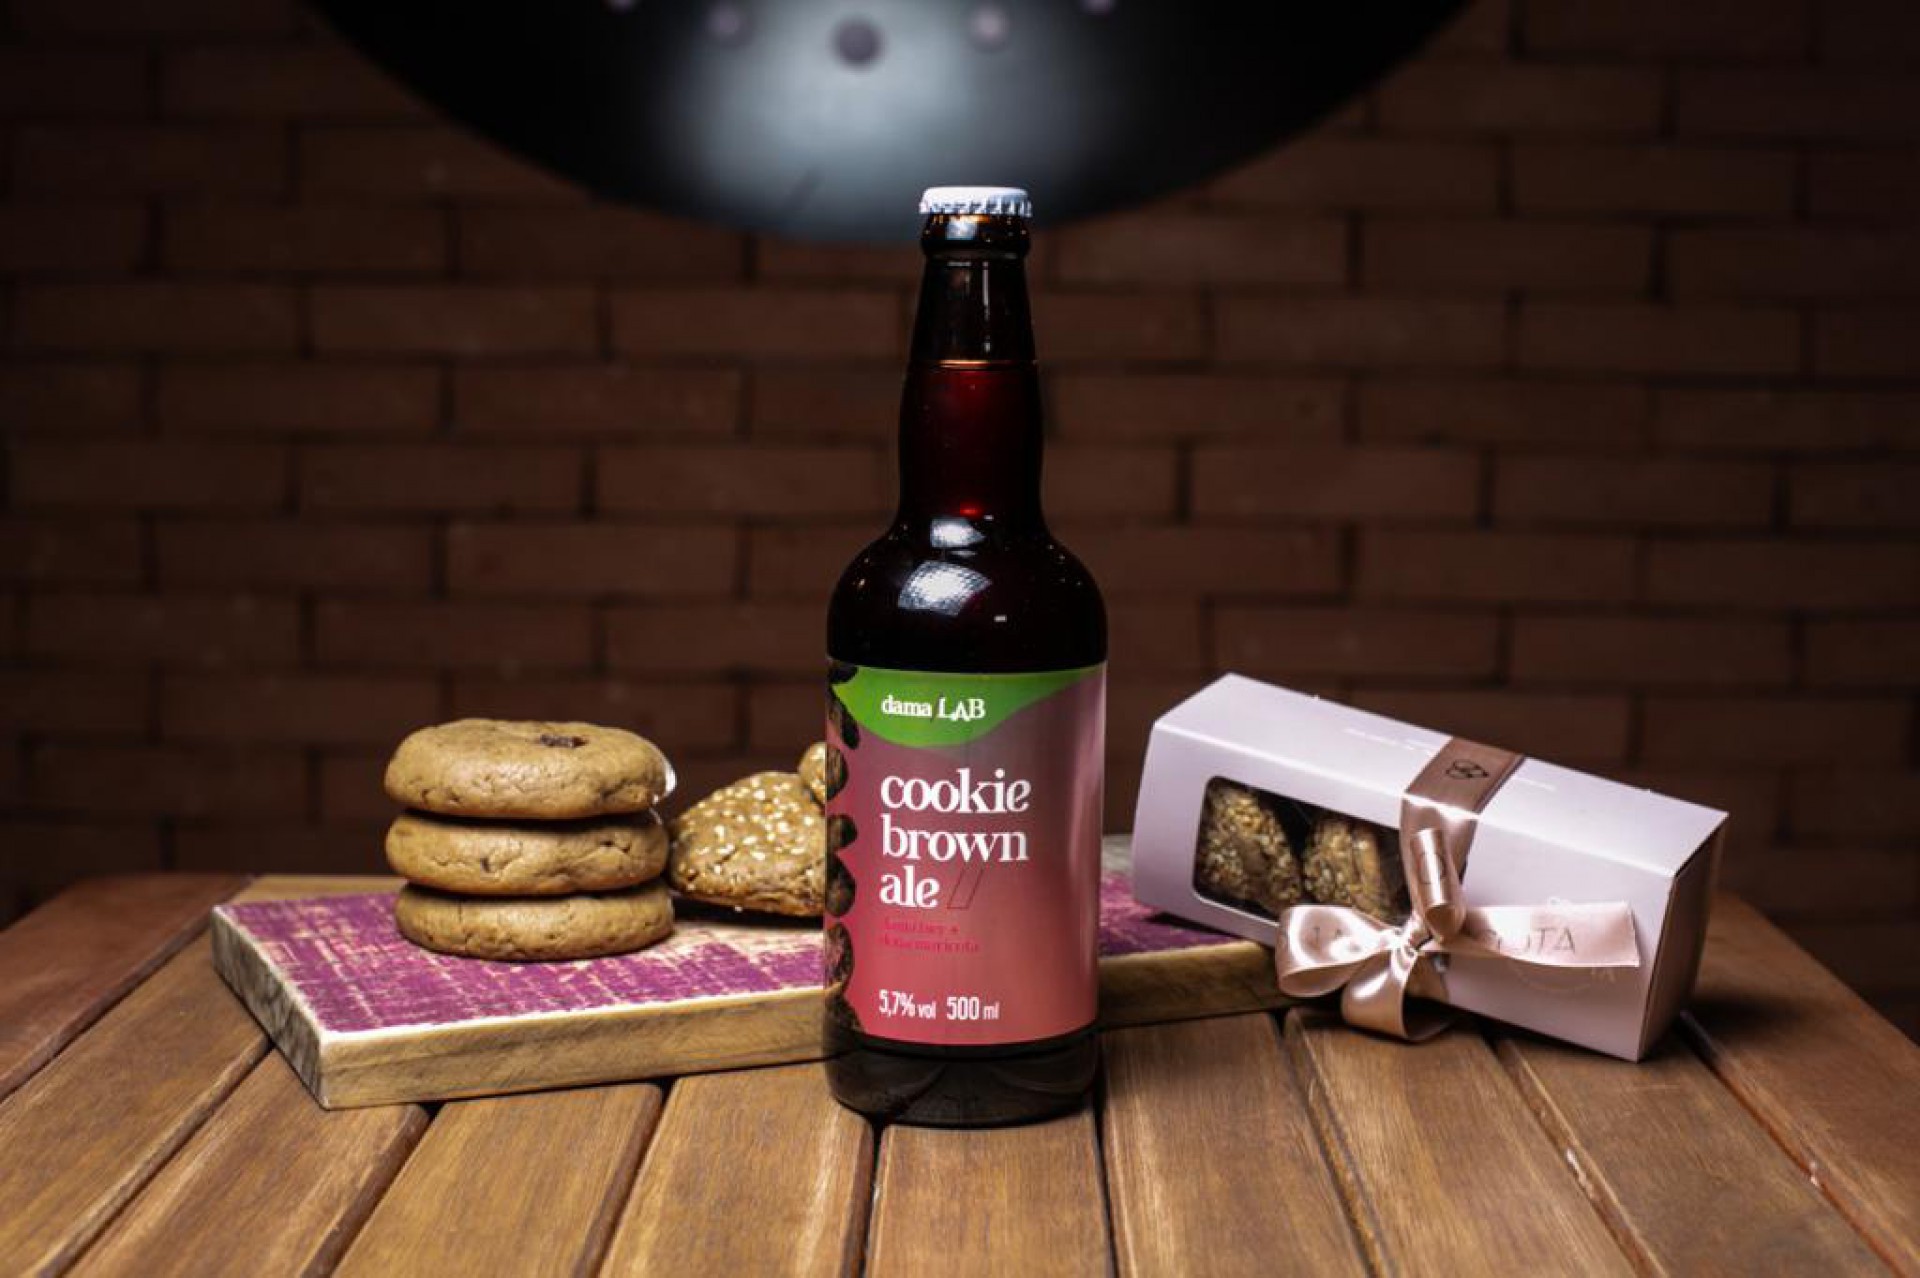 Dama Bier Cookie Brown Ale 5,7% (Foto: divulgação)